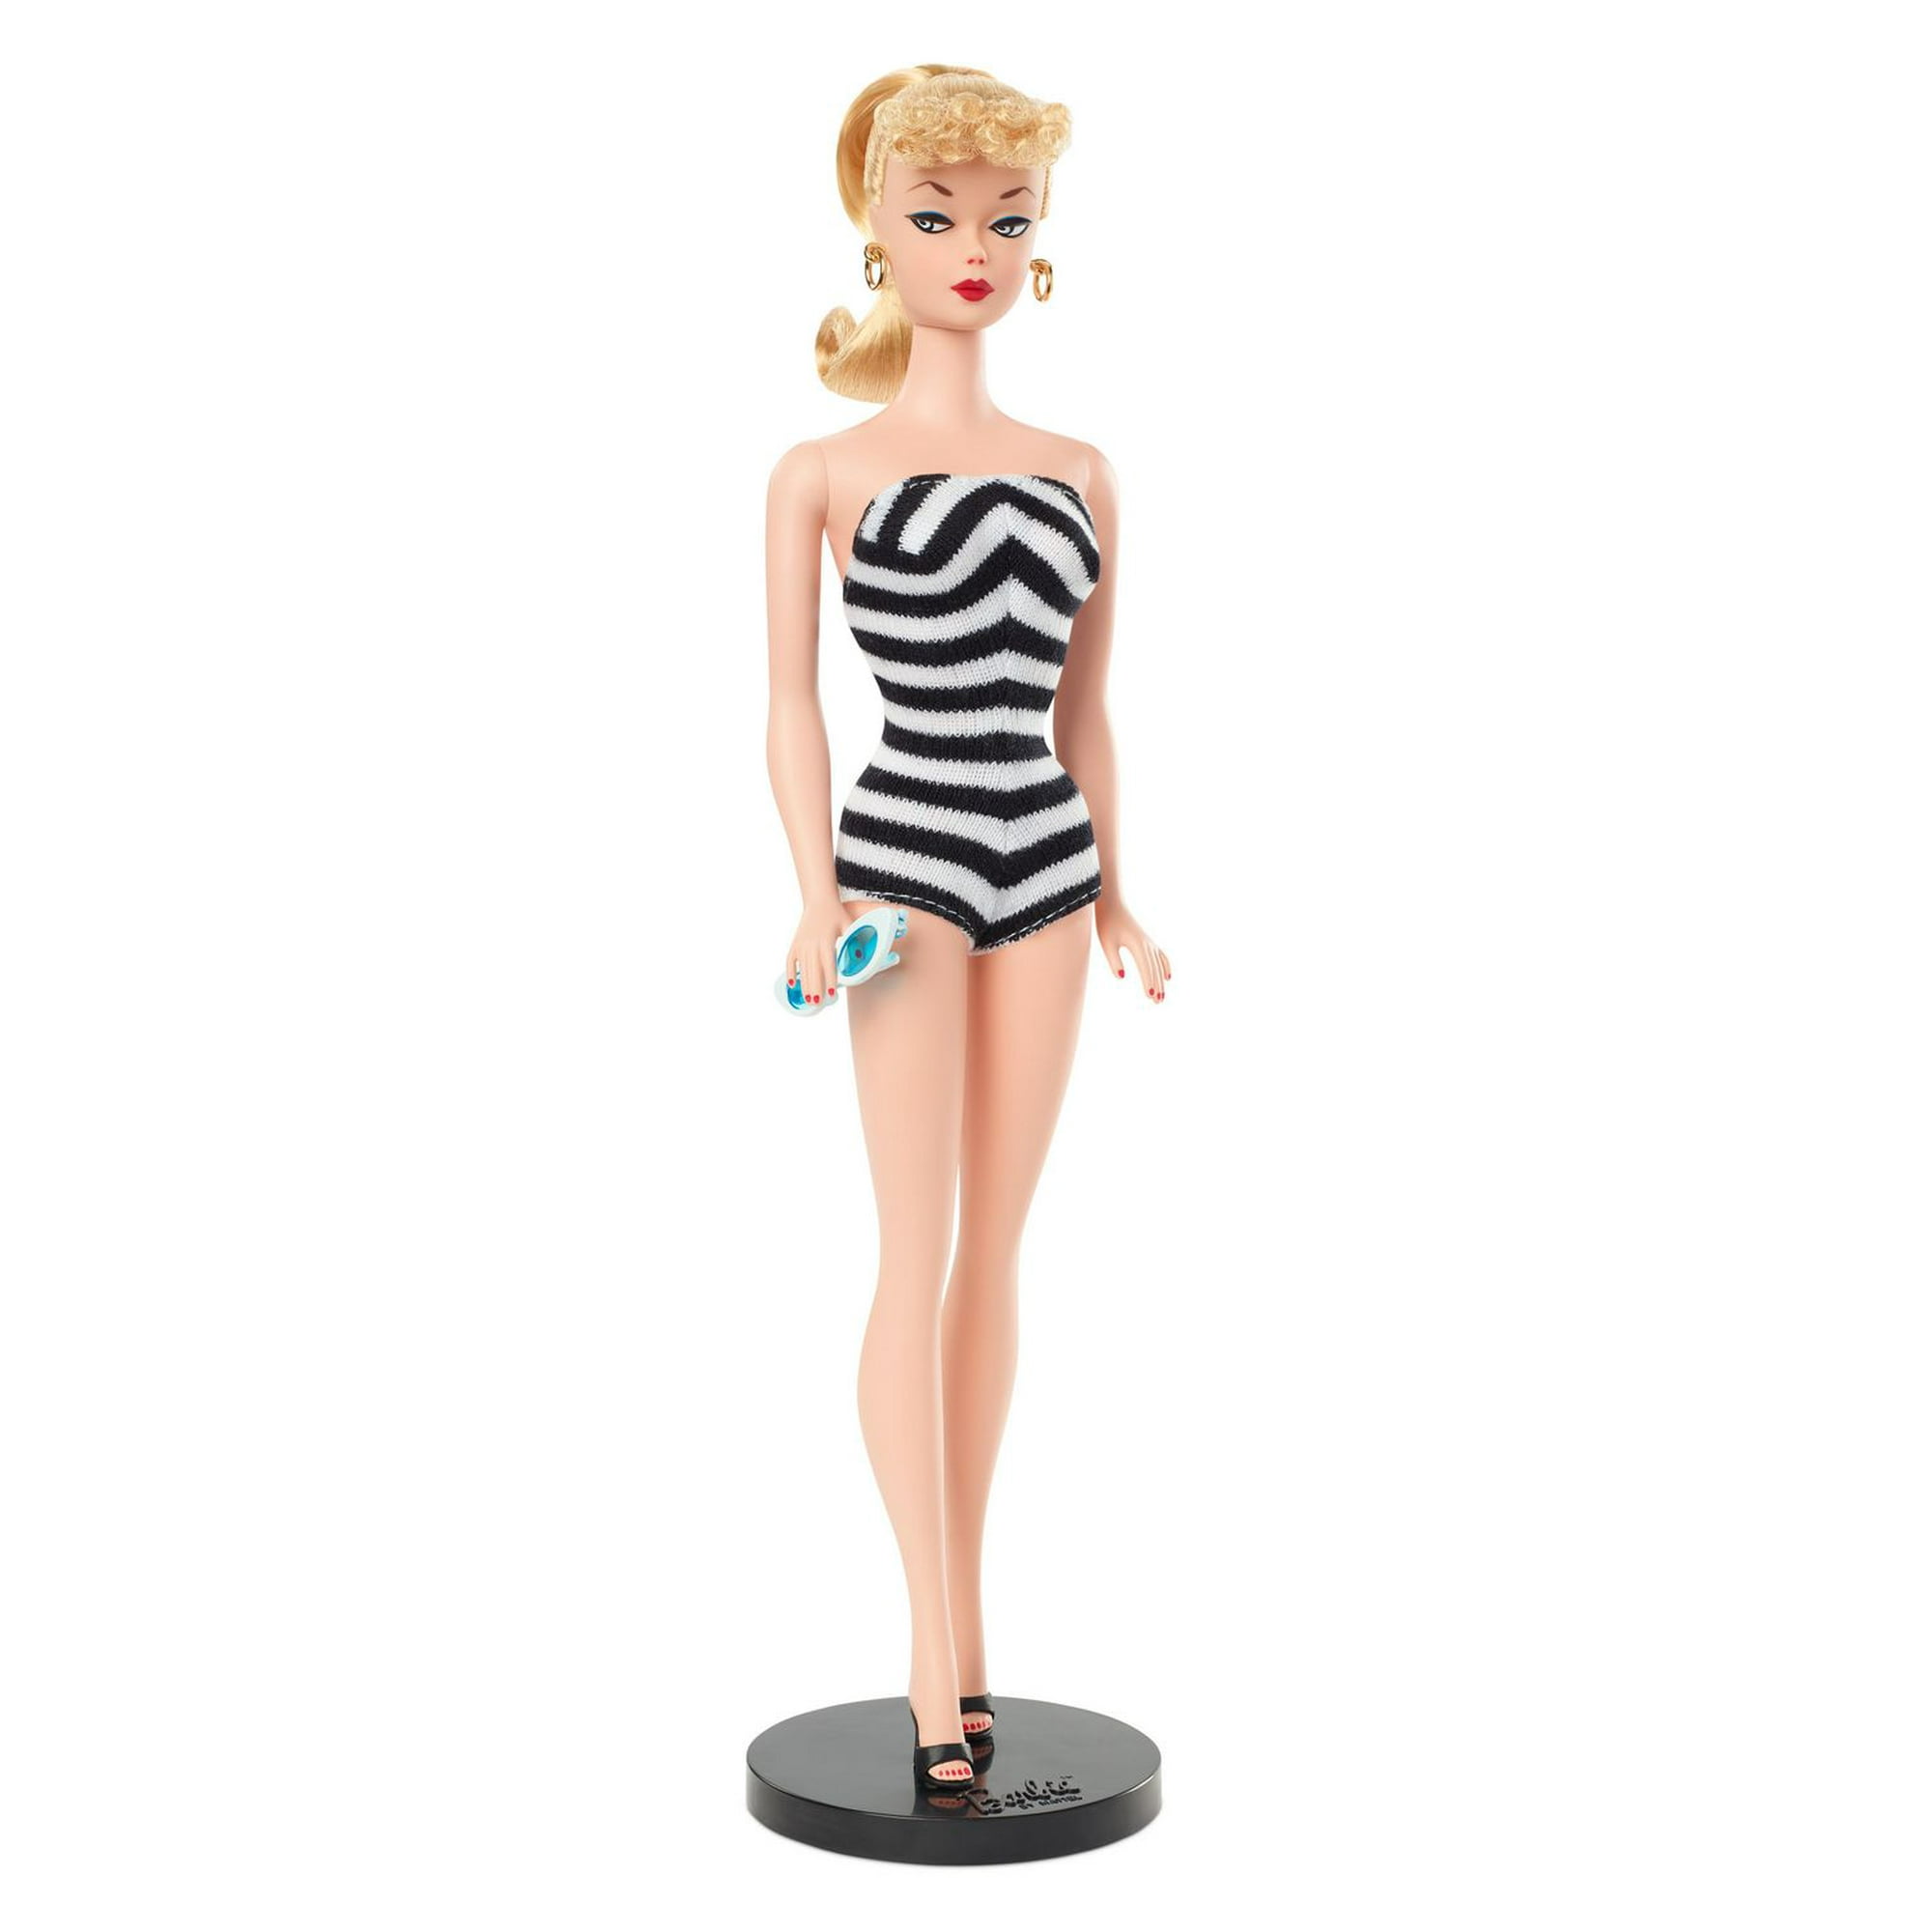  INTIMO Mattel Barbie Logo On Repeat Soft Cuddly Plush